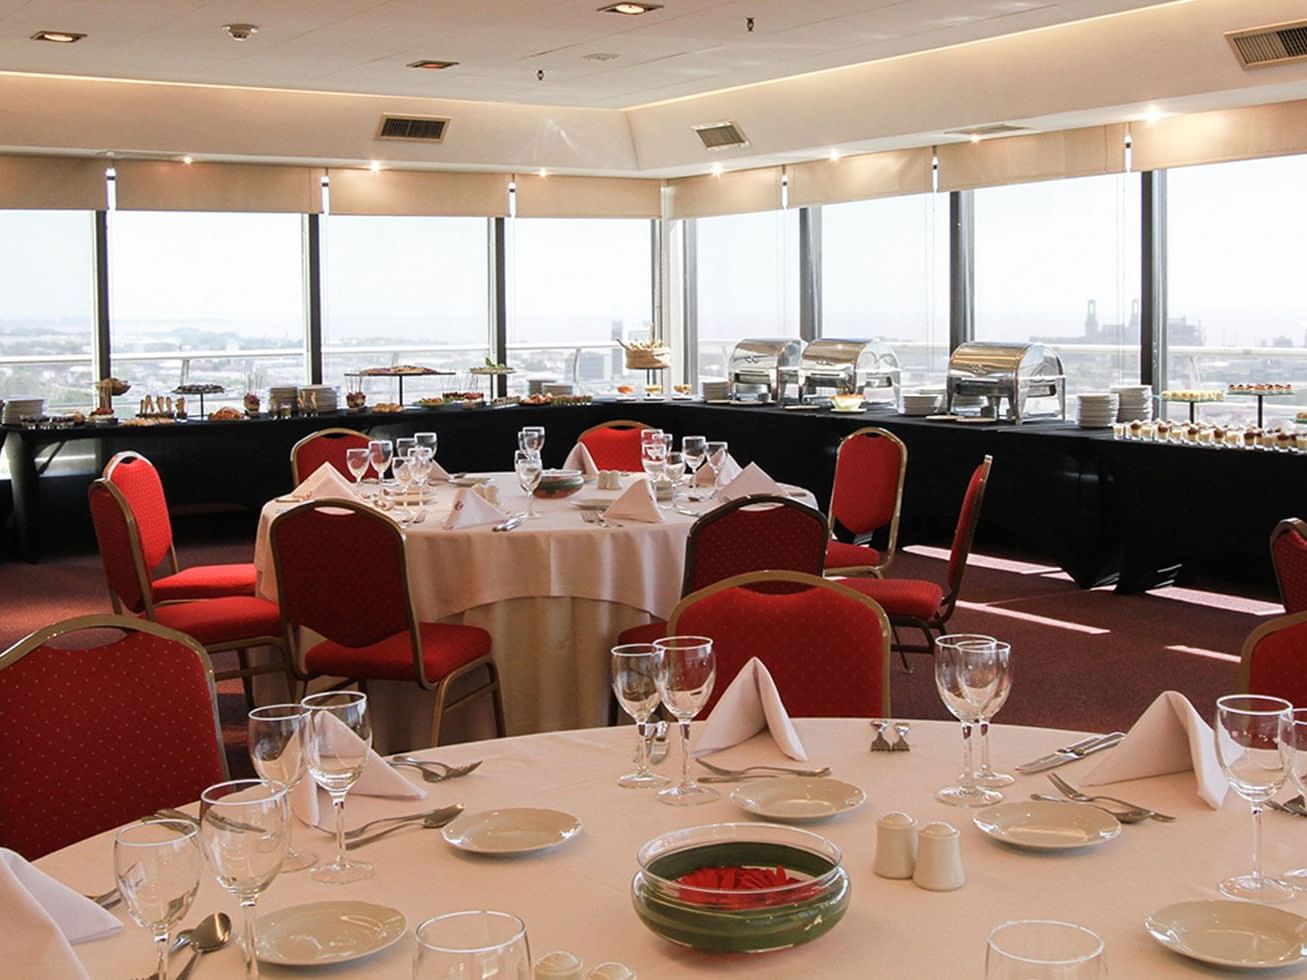 Buffet & dining arrangement in Hotel Emperador Buenos Aires